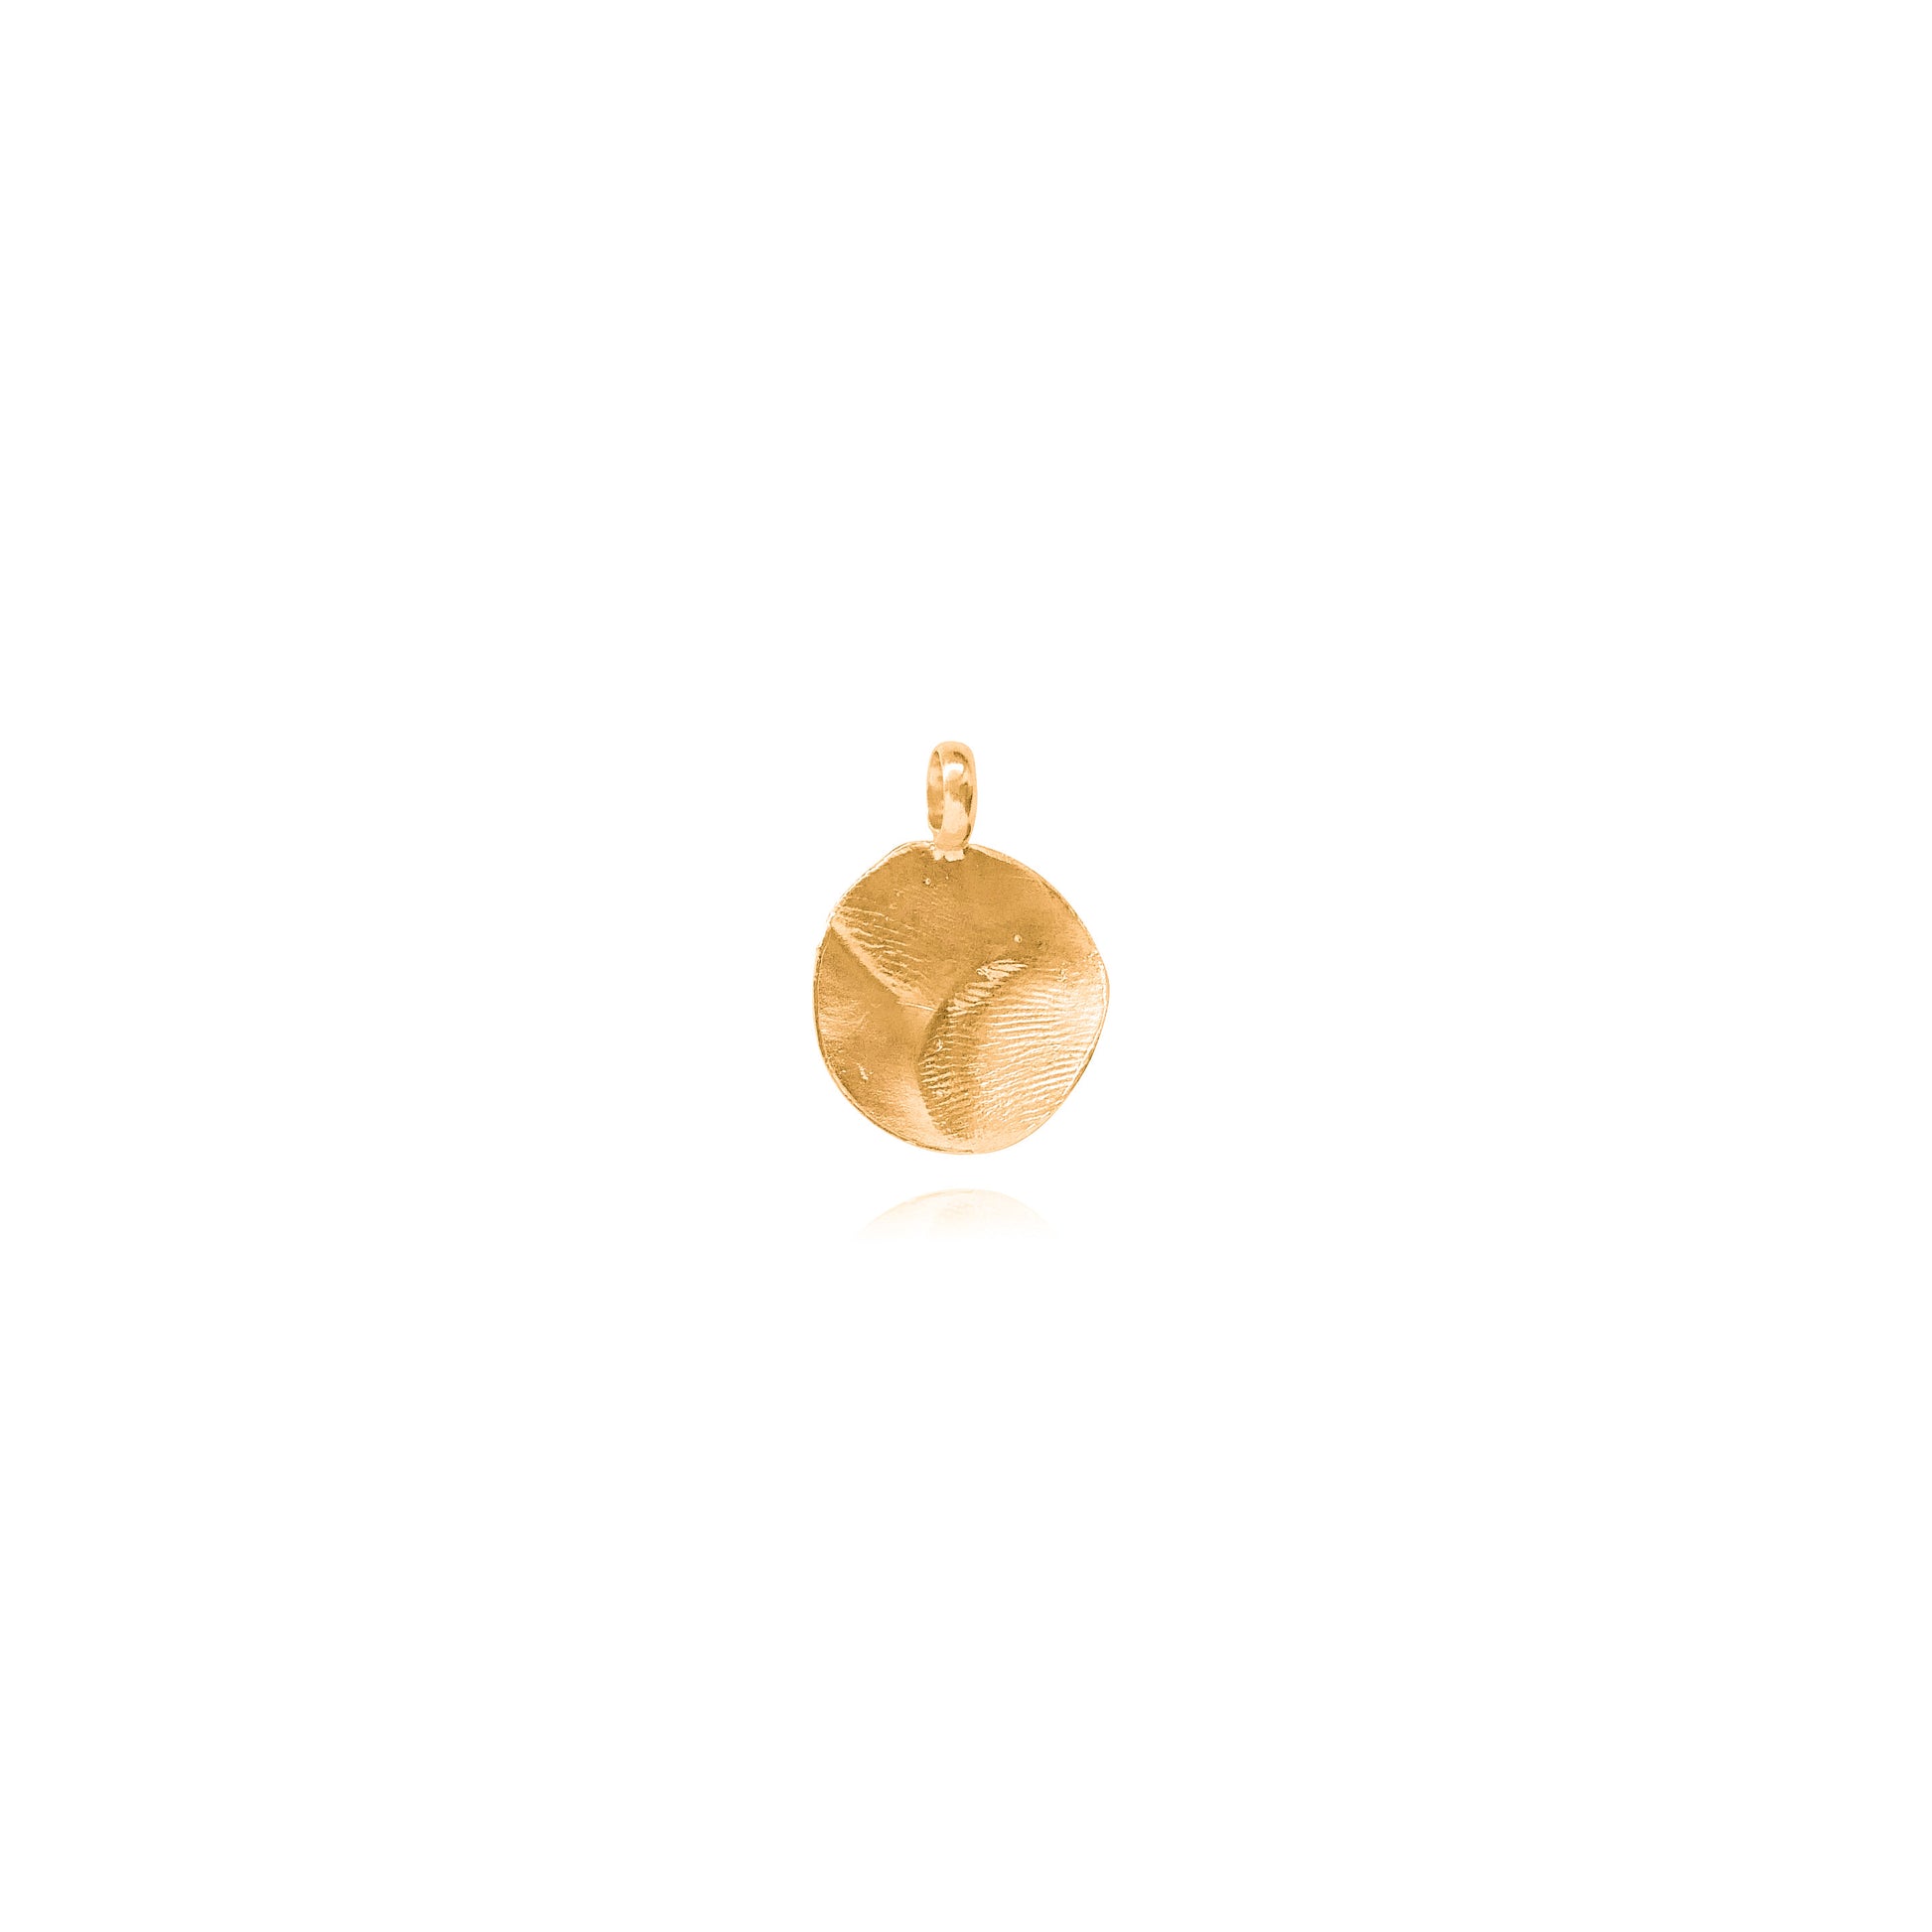 mel jewel bespoke gold necklace fingerprint pendant